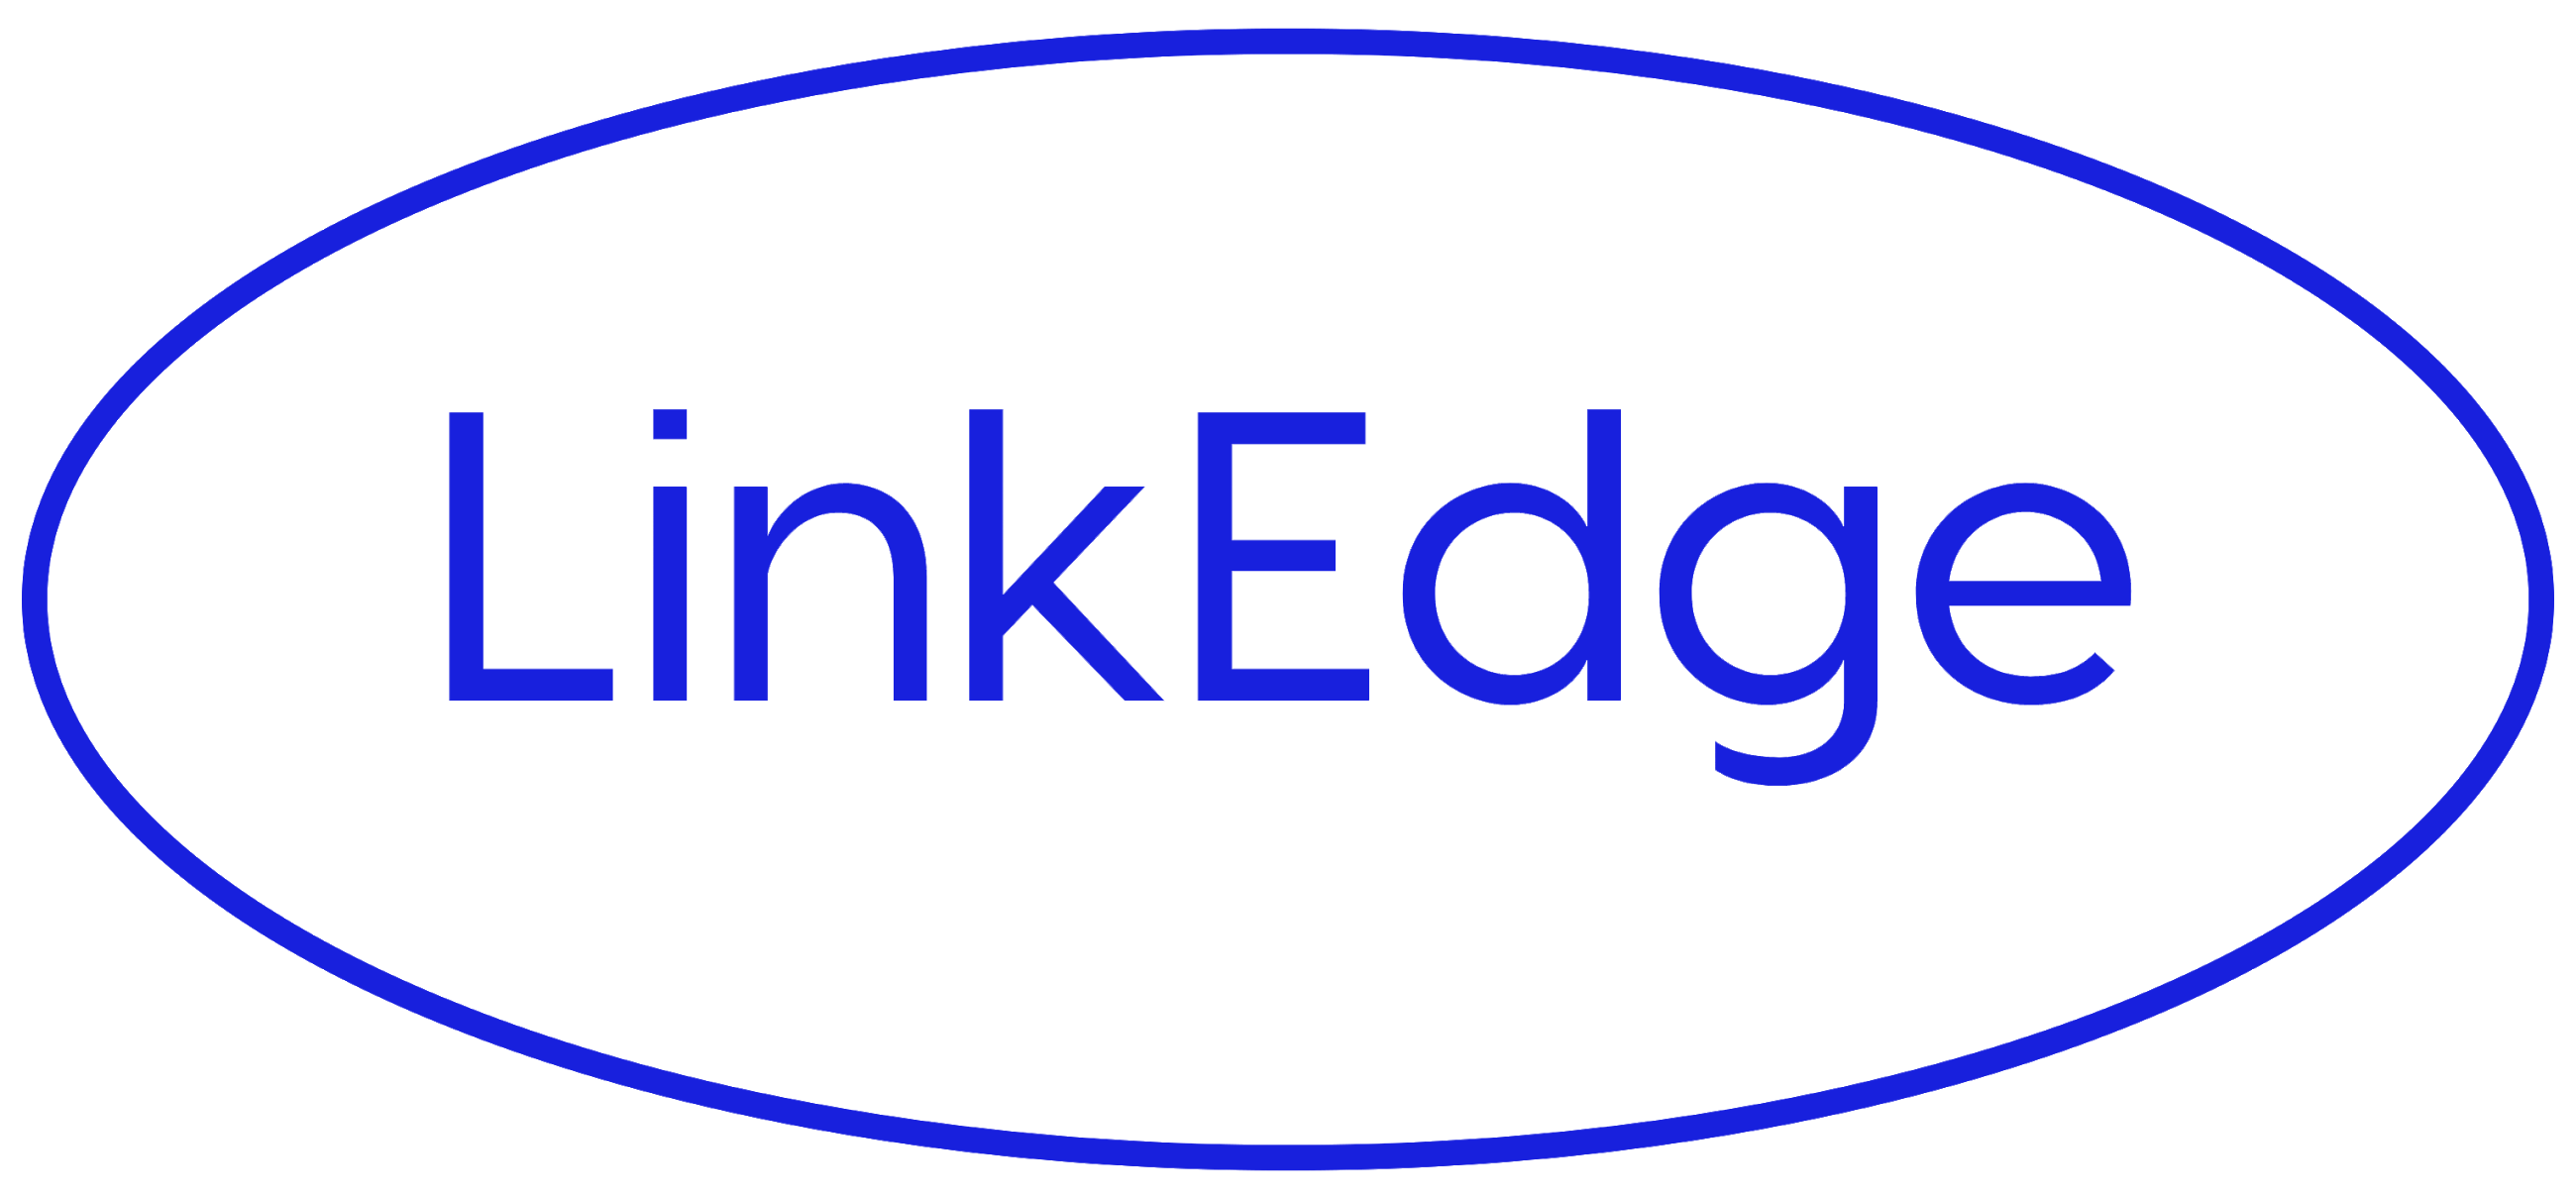 LinkEdge international Pte Ltd